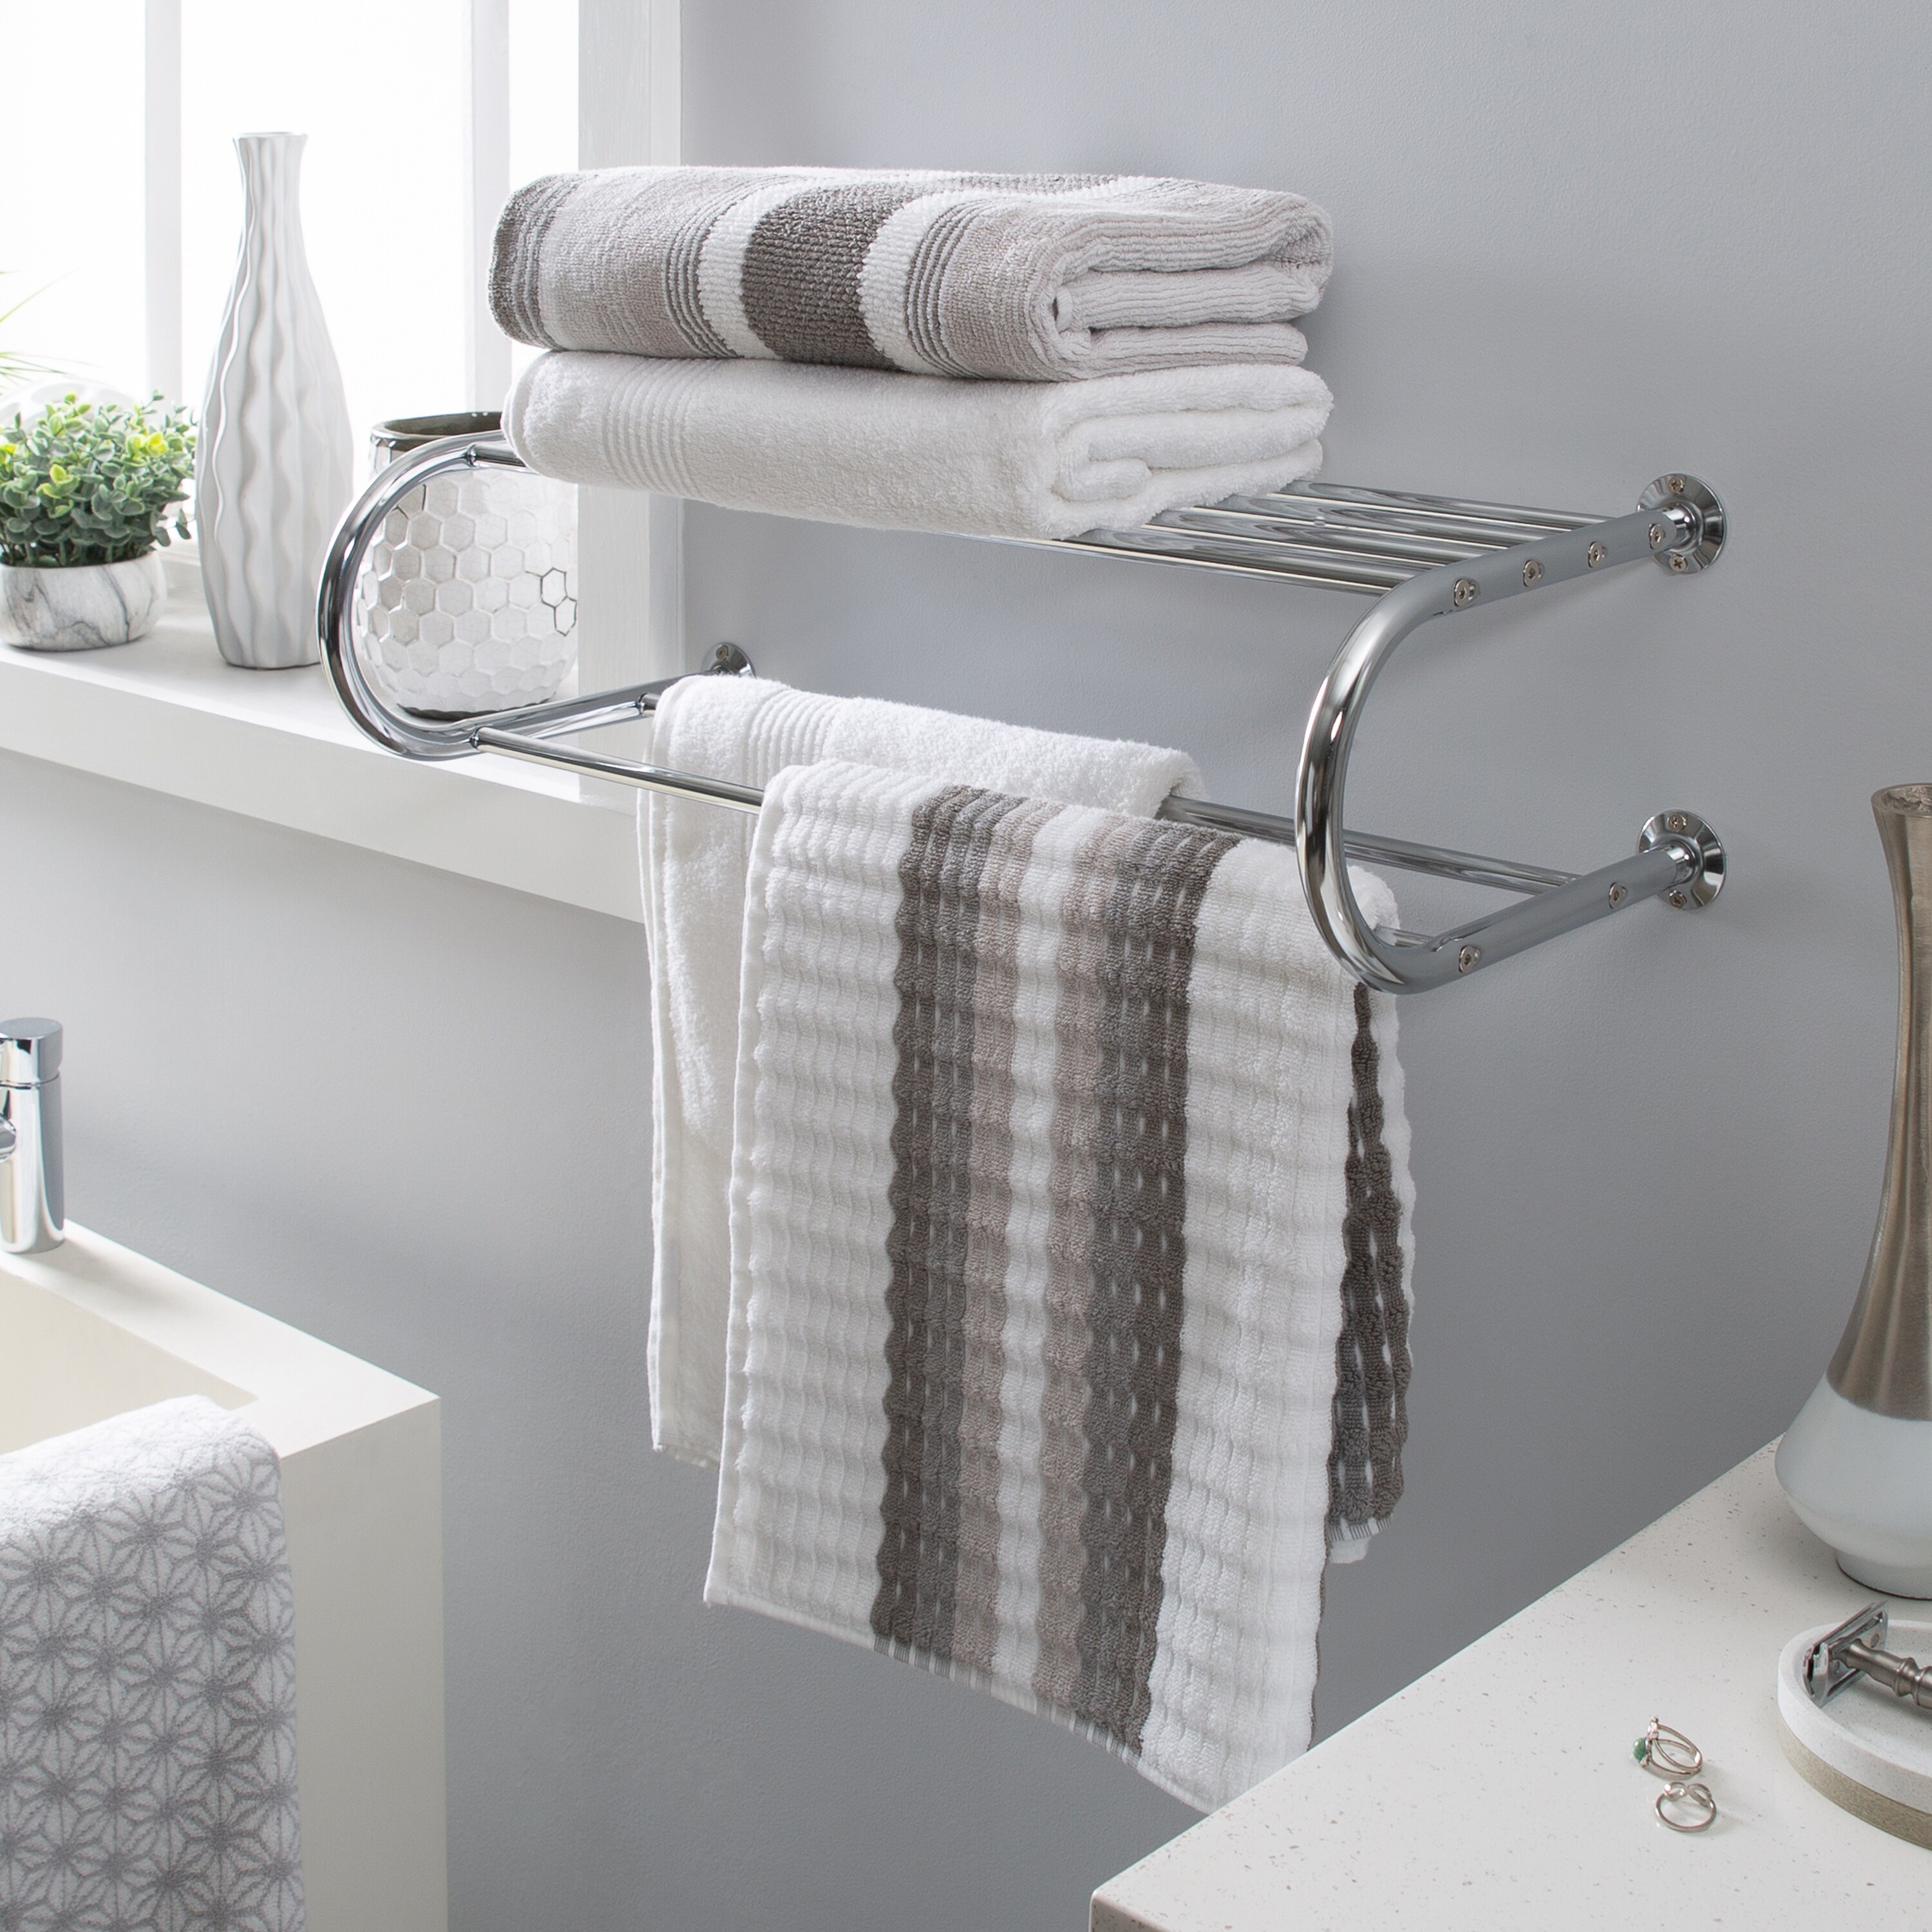 KAIIY Towel Rack 26-Inch Bathroom Shelf with Towel Bar Provides Extra Storage Hotel Style Chrome 